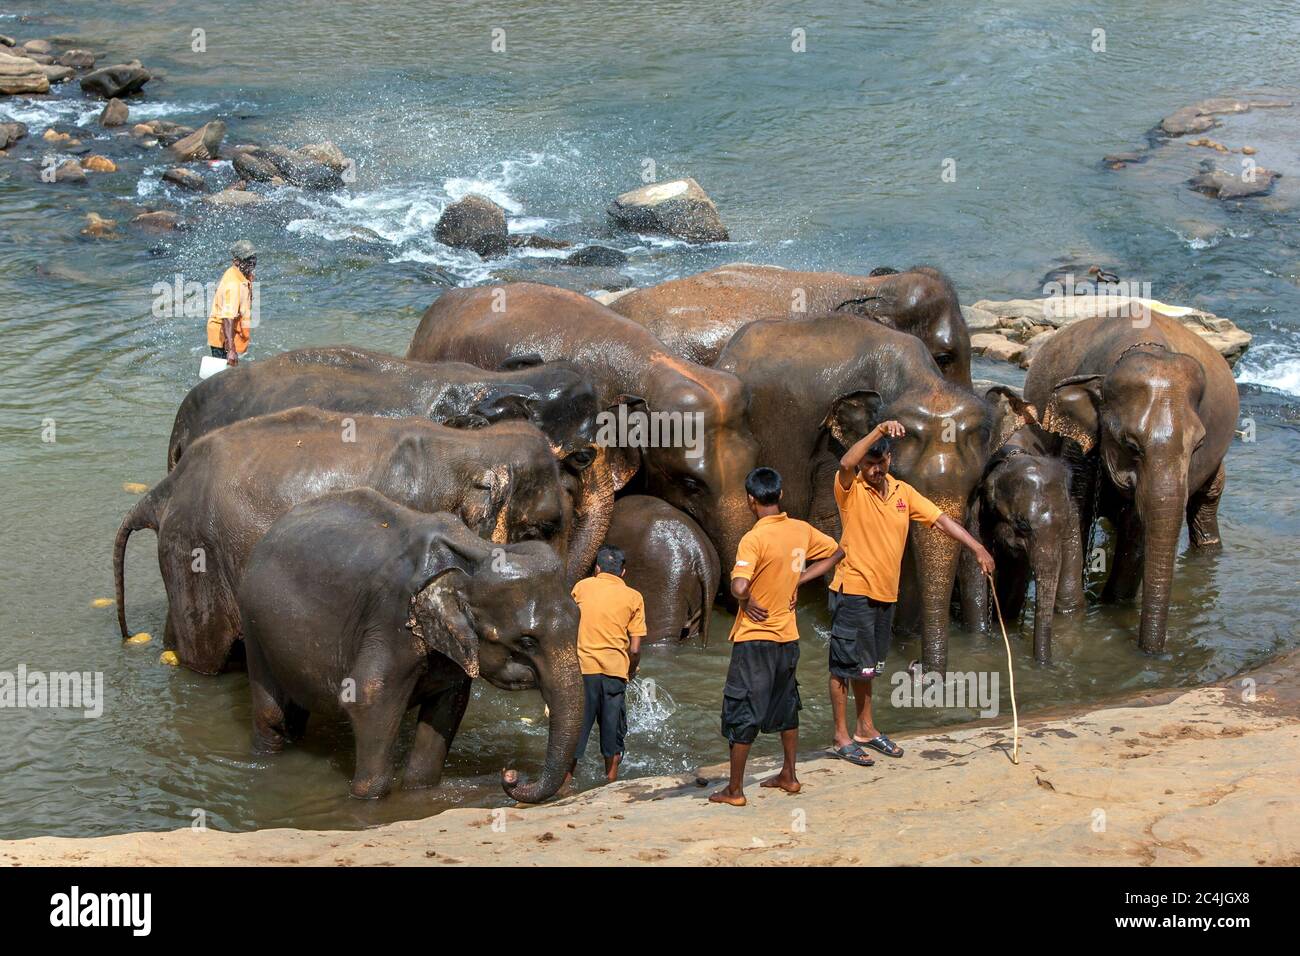 Elephants from the Pinnawala Elephant Orphanage in Sri Lanka bathe in the Maha Oya River as their mahouts keep watch over them. Stock Photo